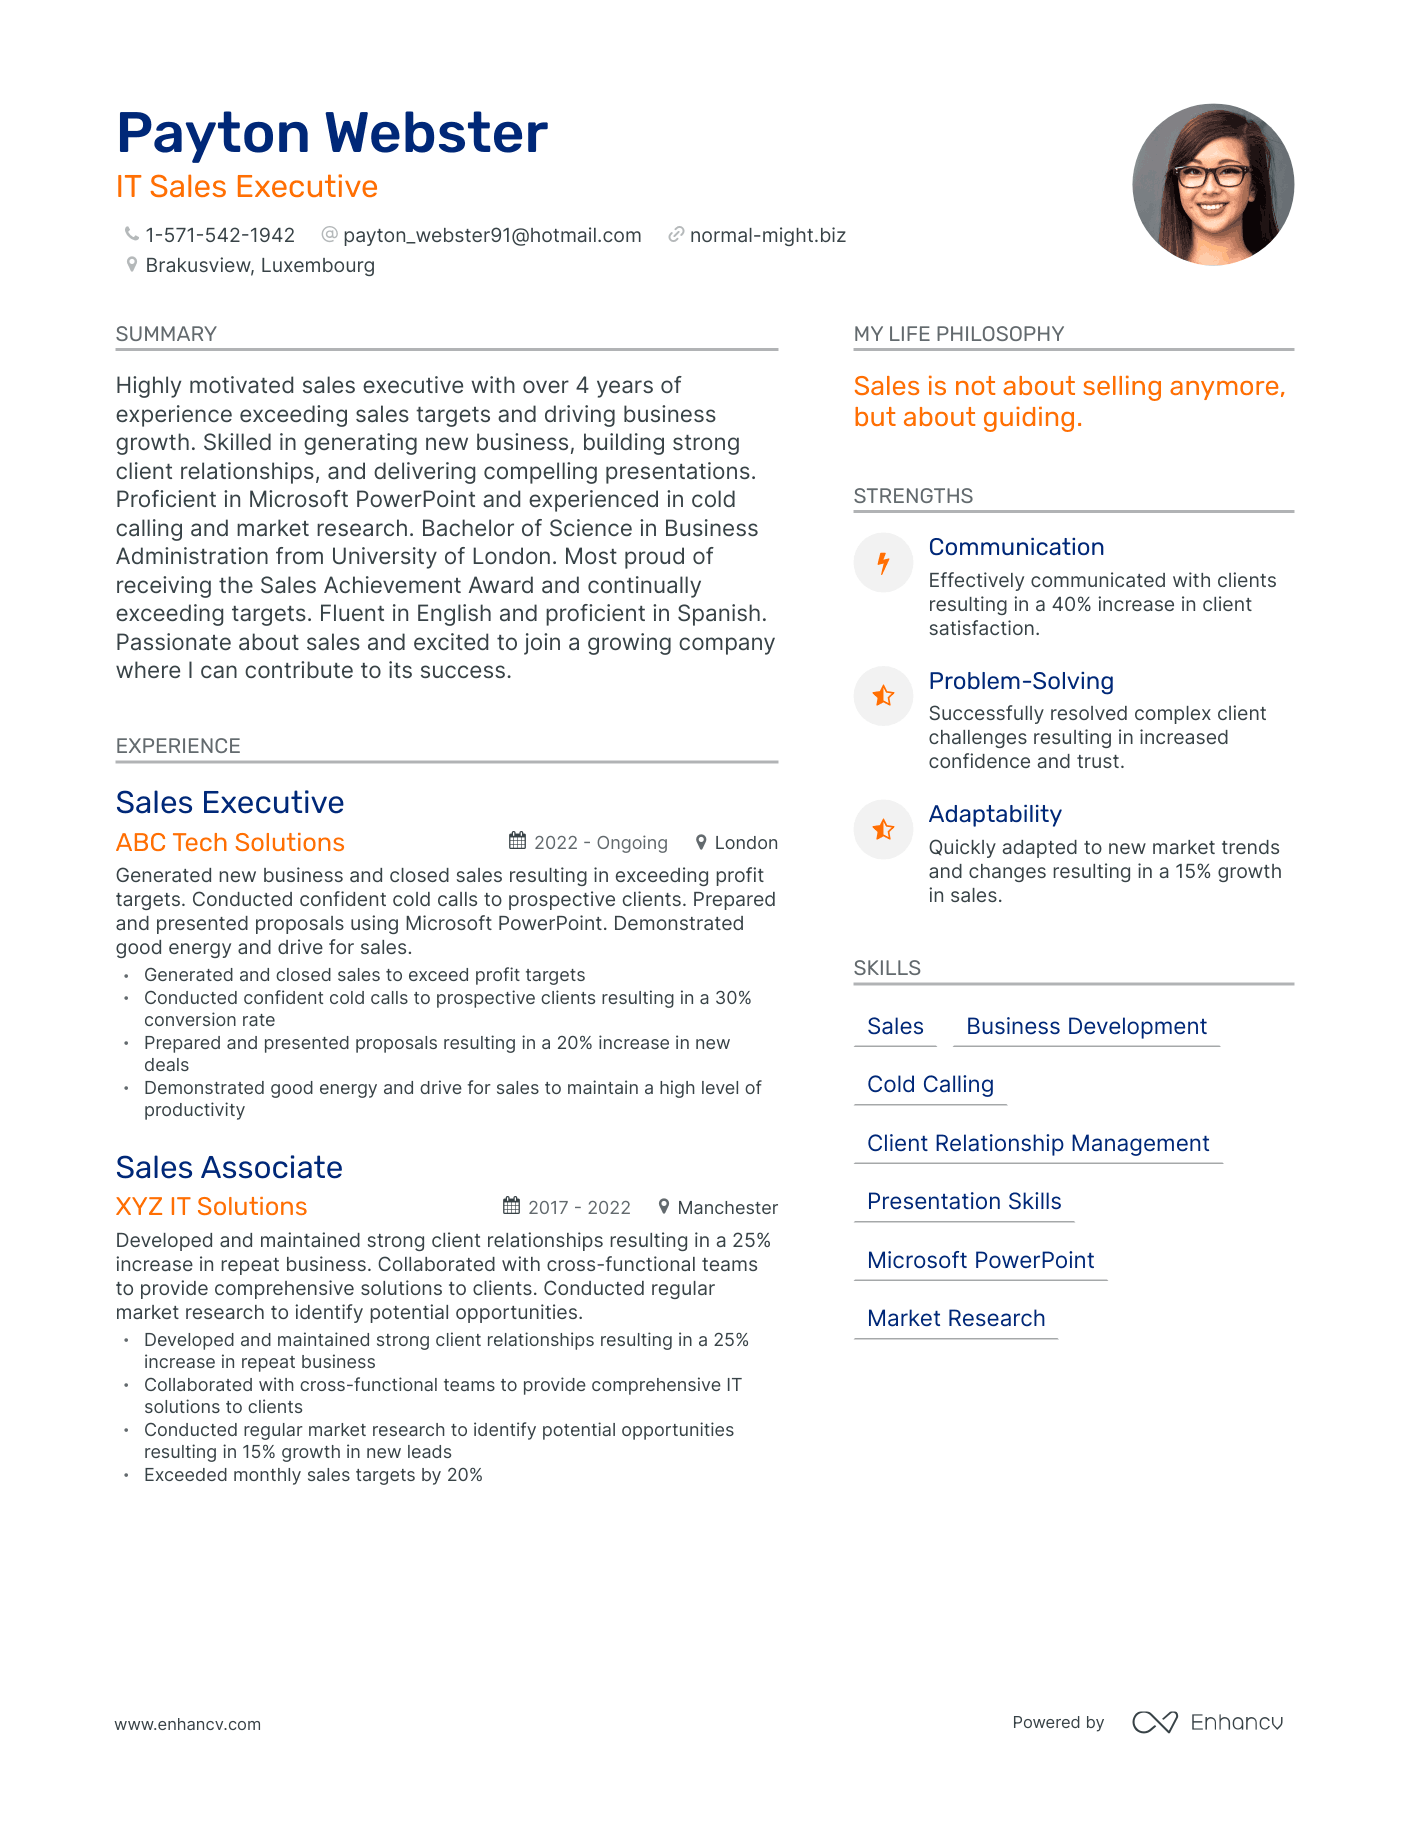 IT Sales Executive resume example